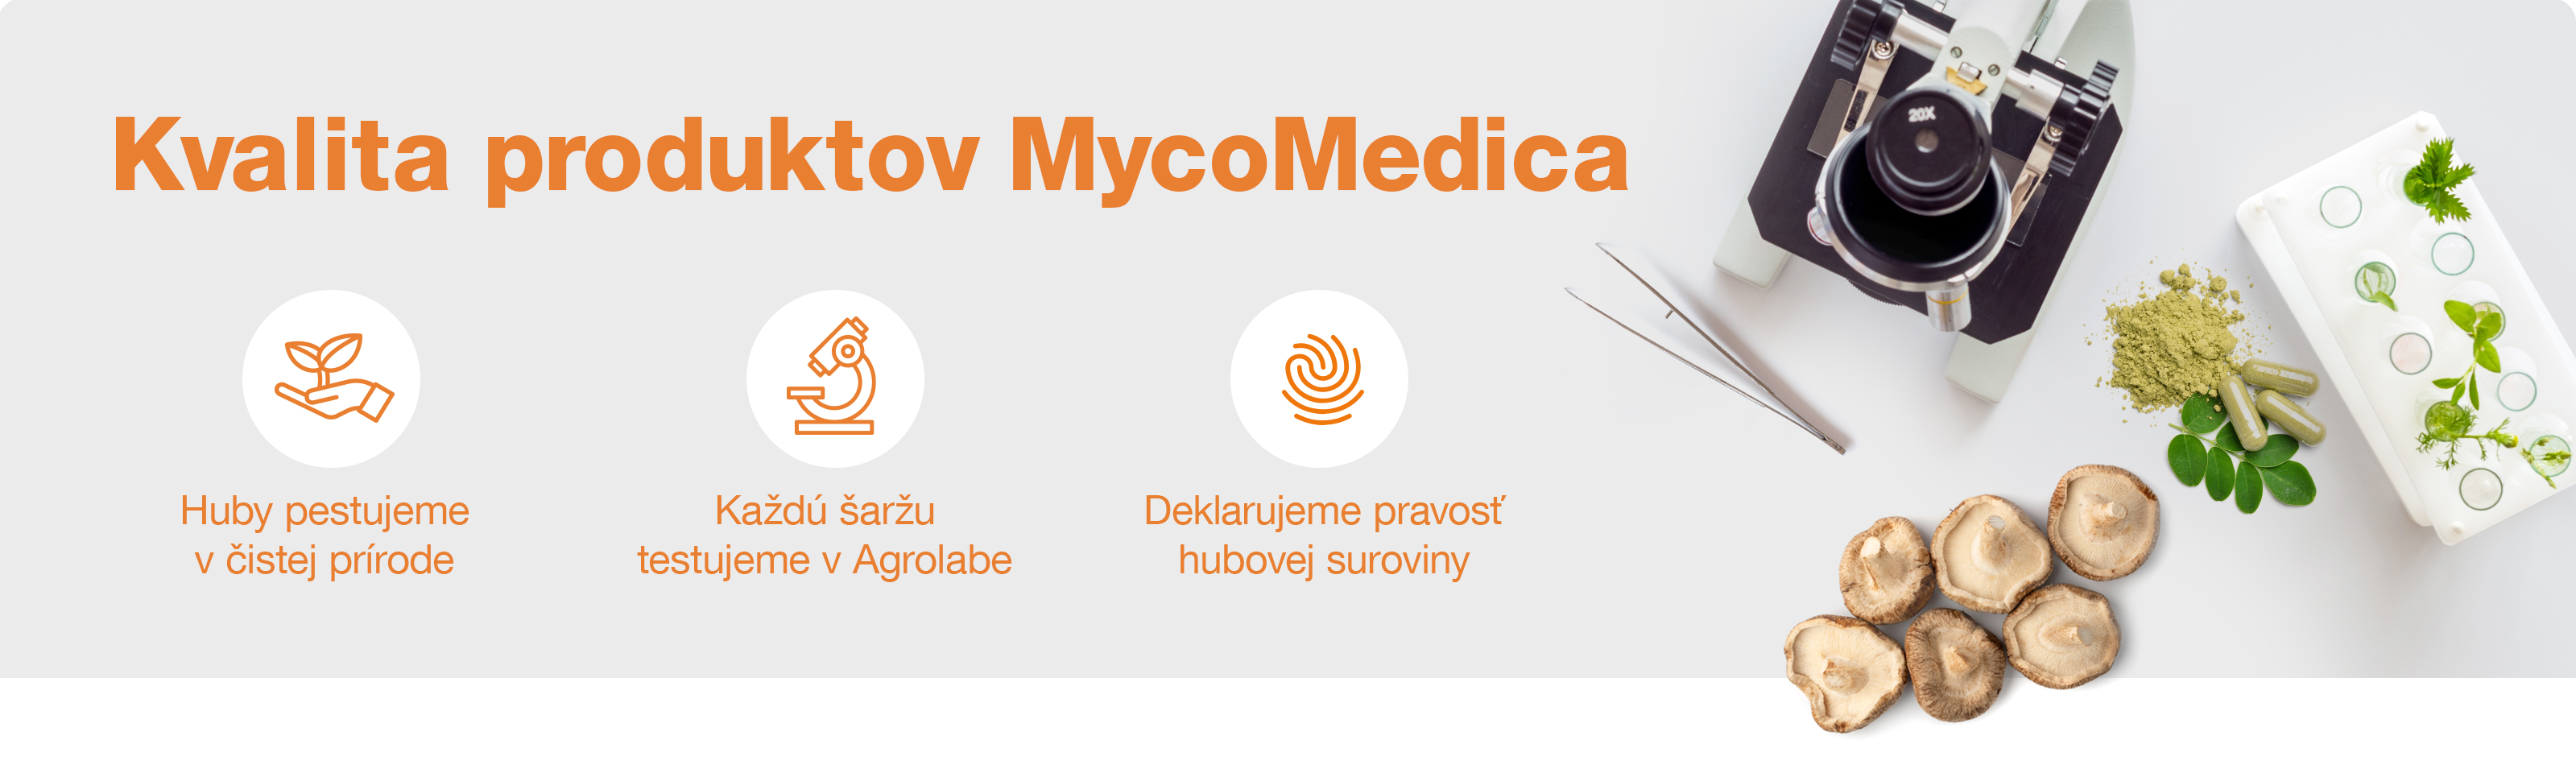 banner Kvalita surovin MycoMedica_SK kopie